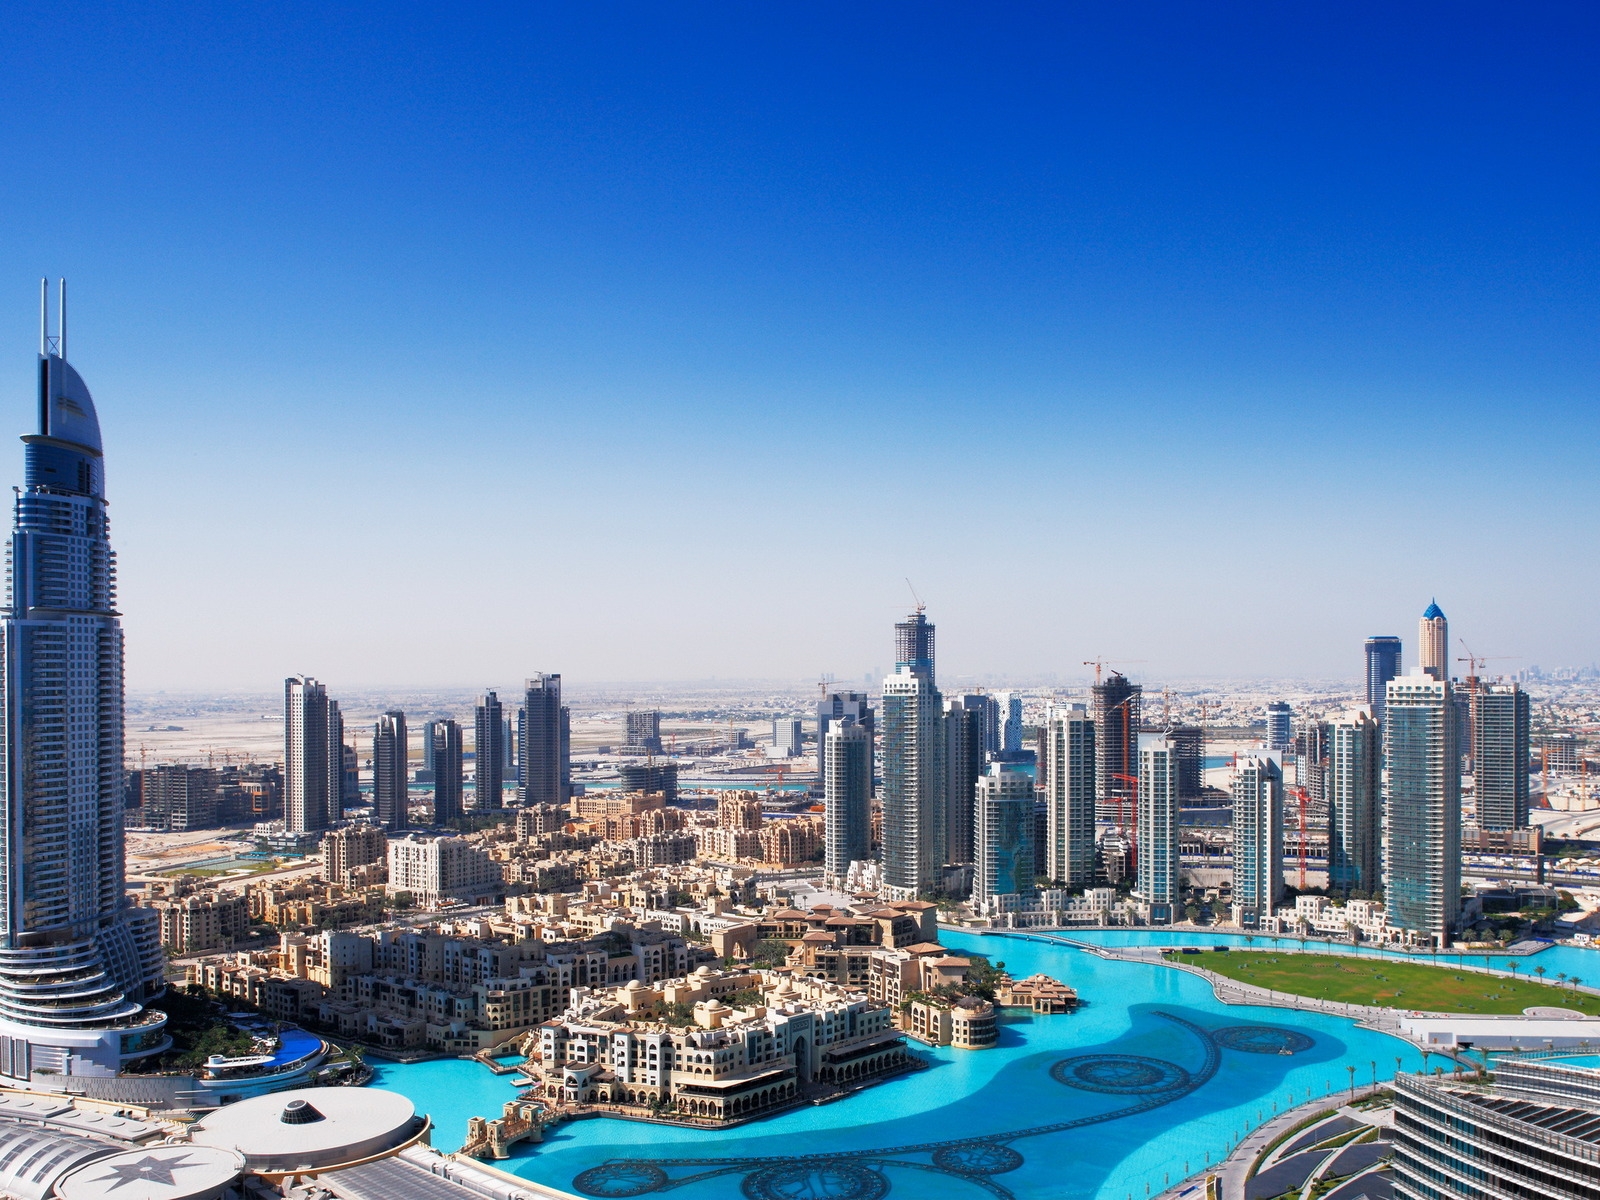 Dubai Overview for 1600 x 1200 resolution